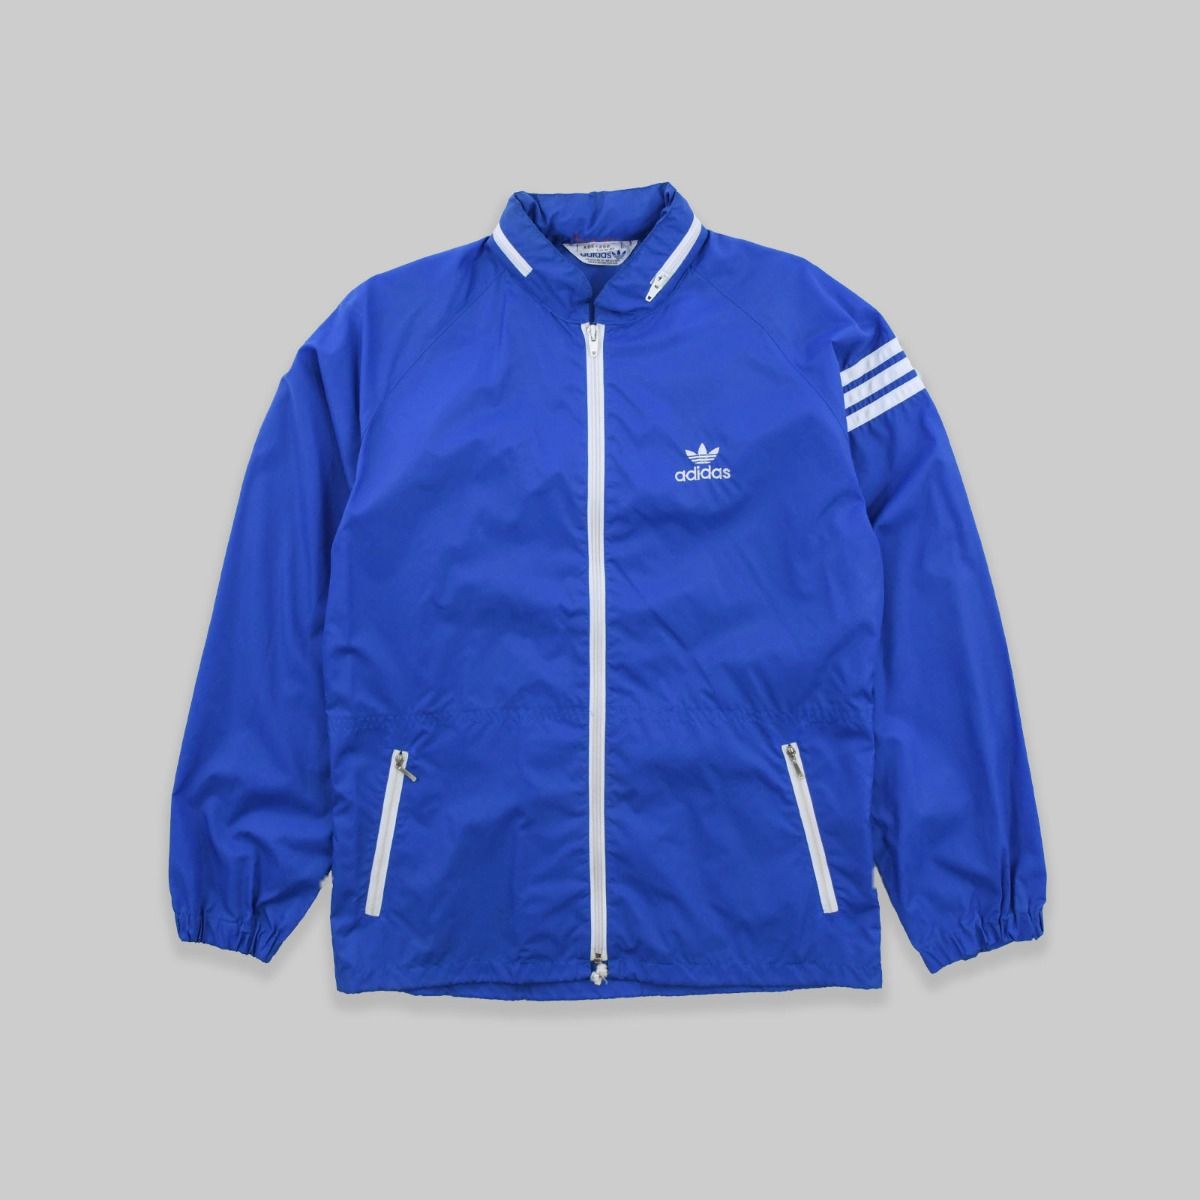 Adidas Early 1980s ADS-200 Shell Jacket